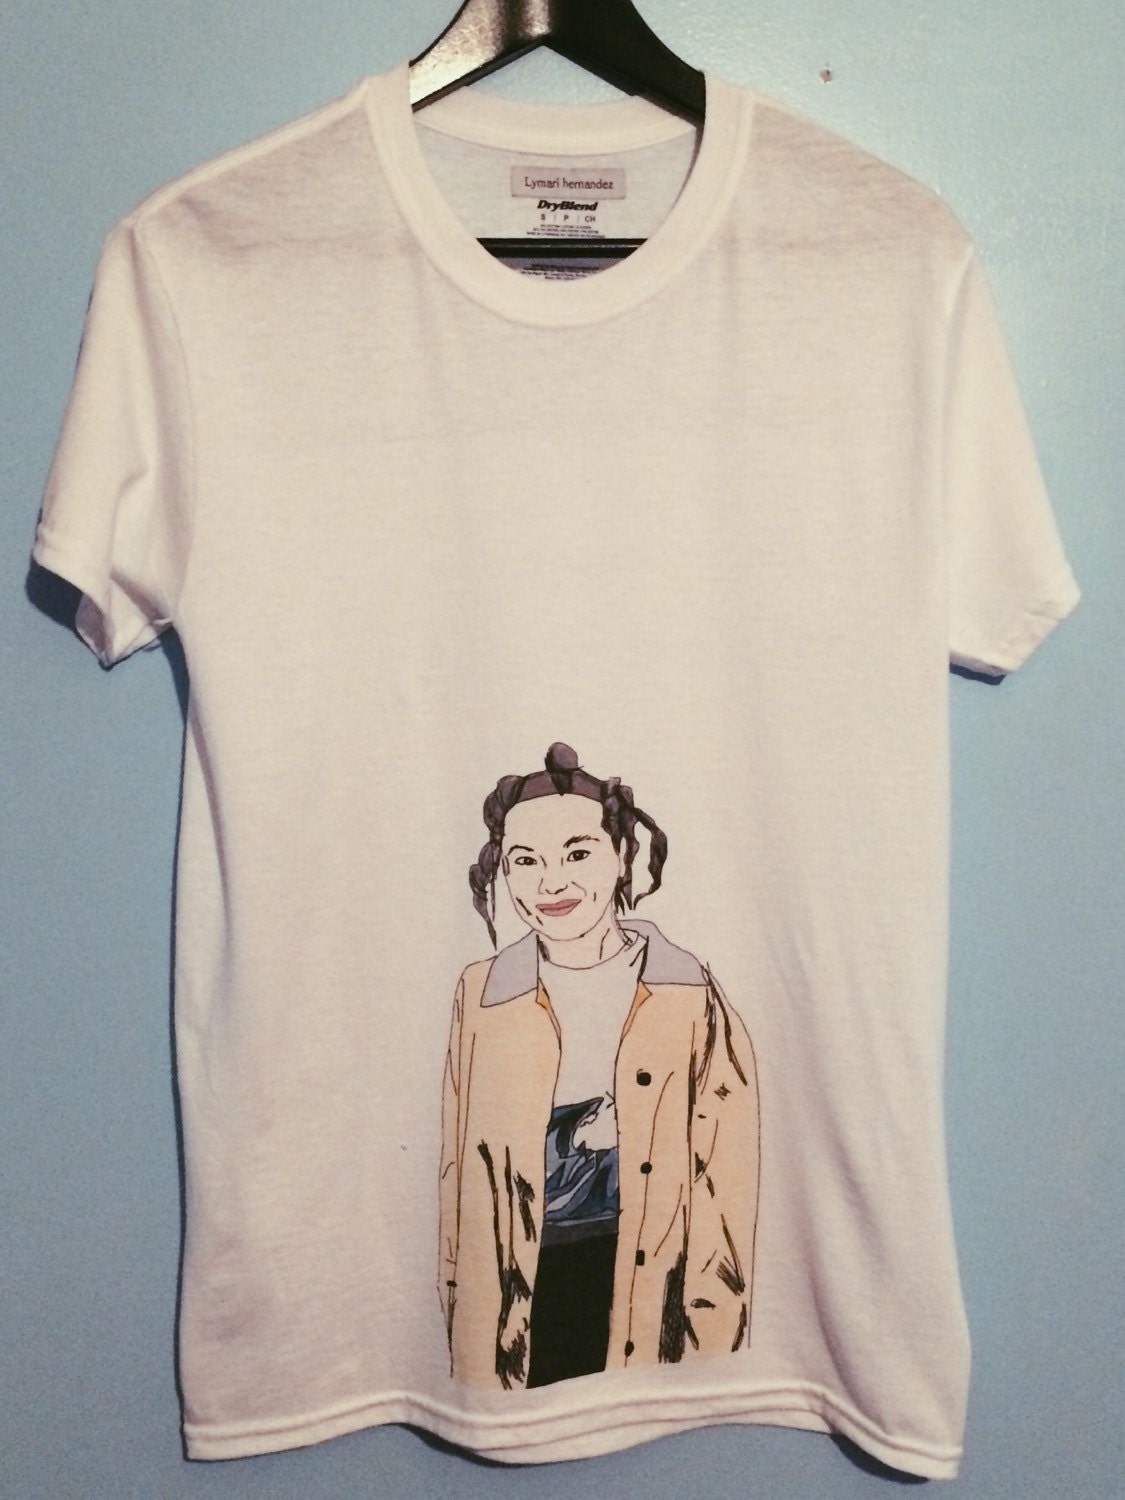 Björk 90s graphic t-shirt 1 by Lymarihernandez on Etsy